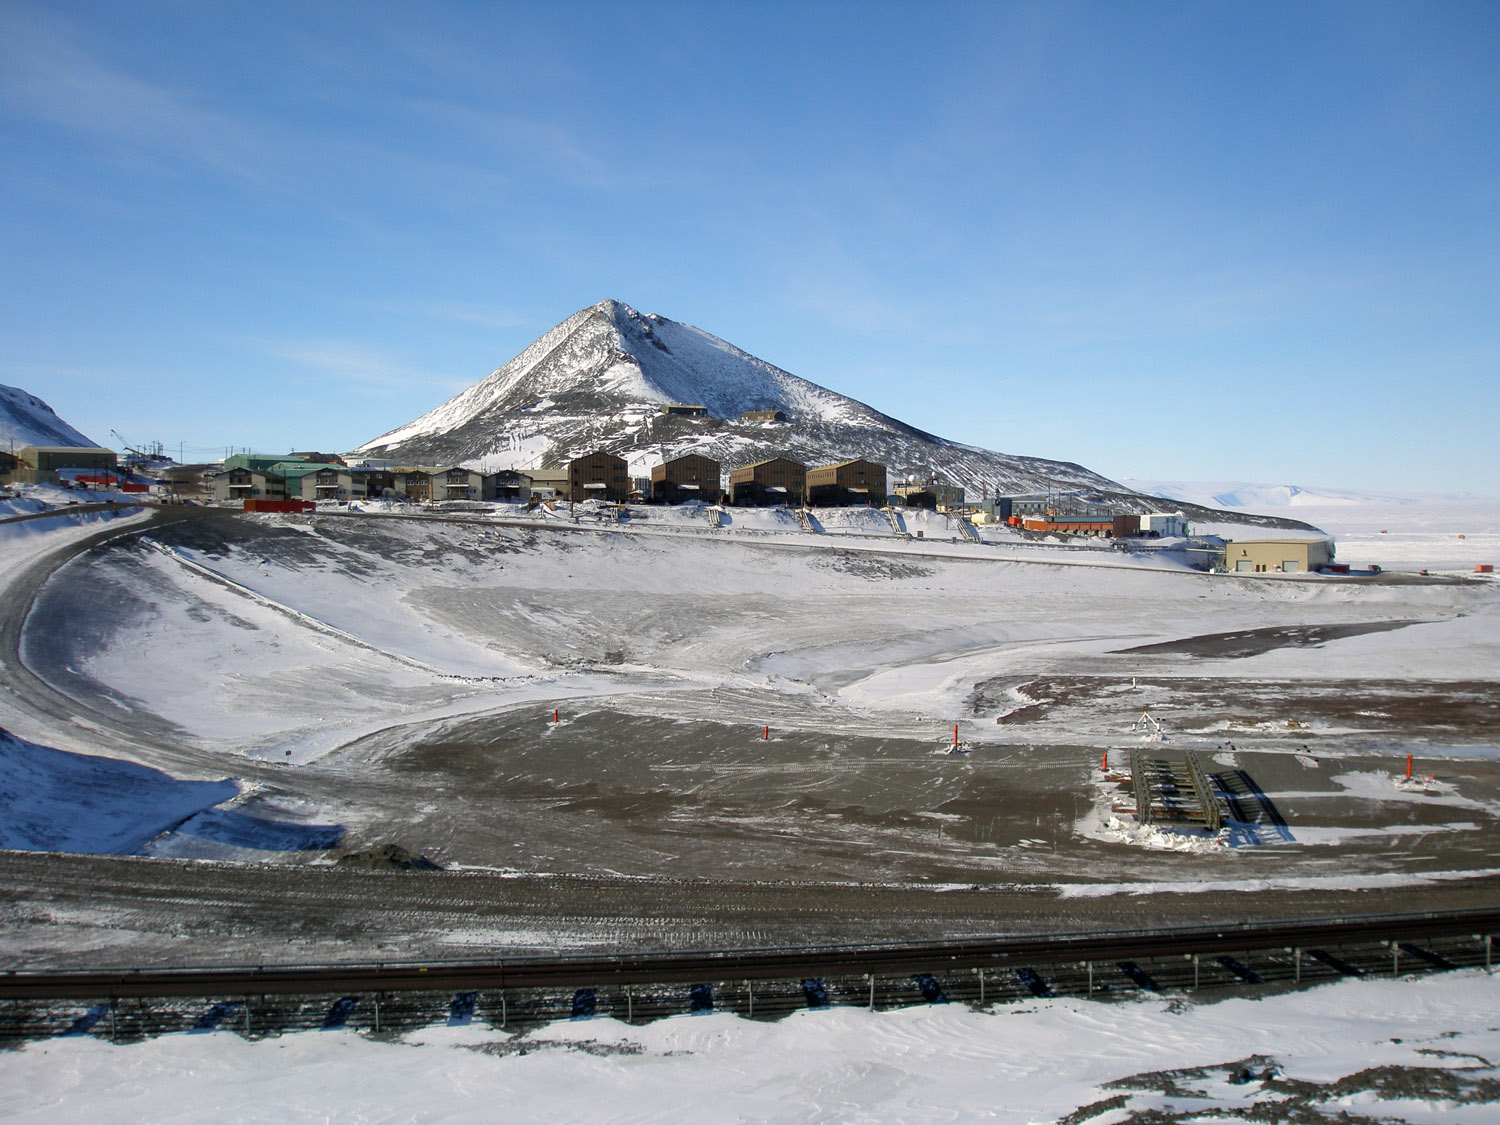 McMurdo Station, seen from Hut Ridge